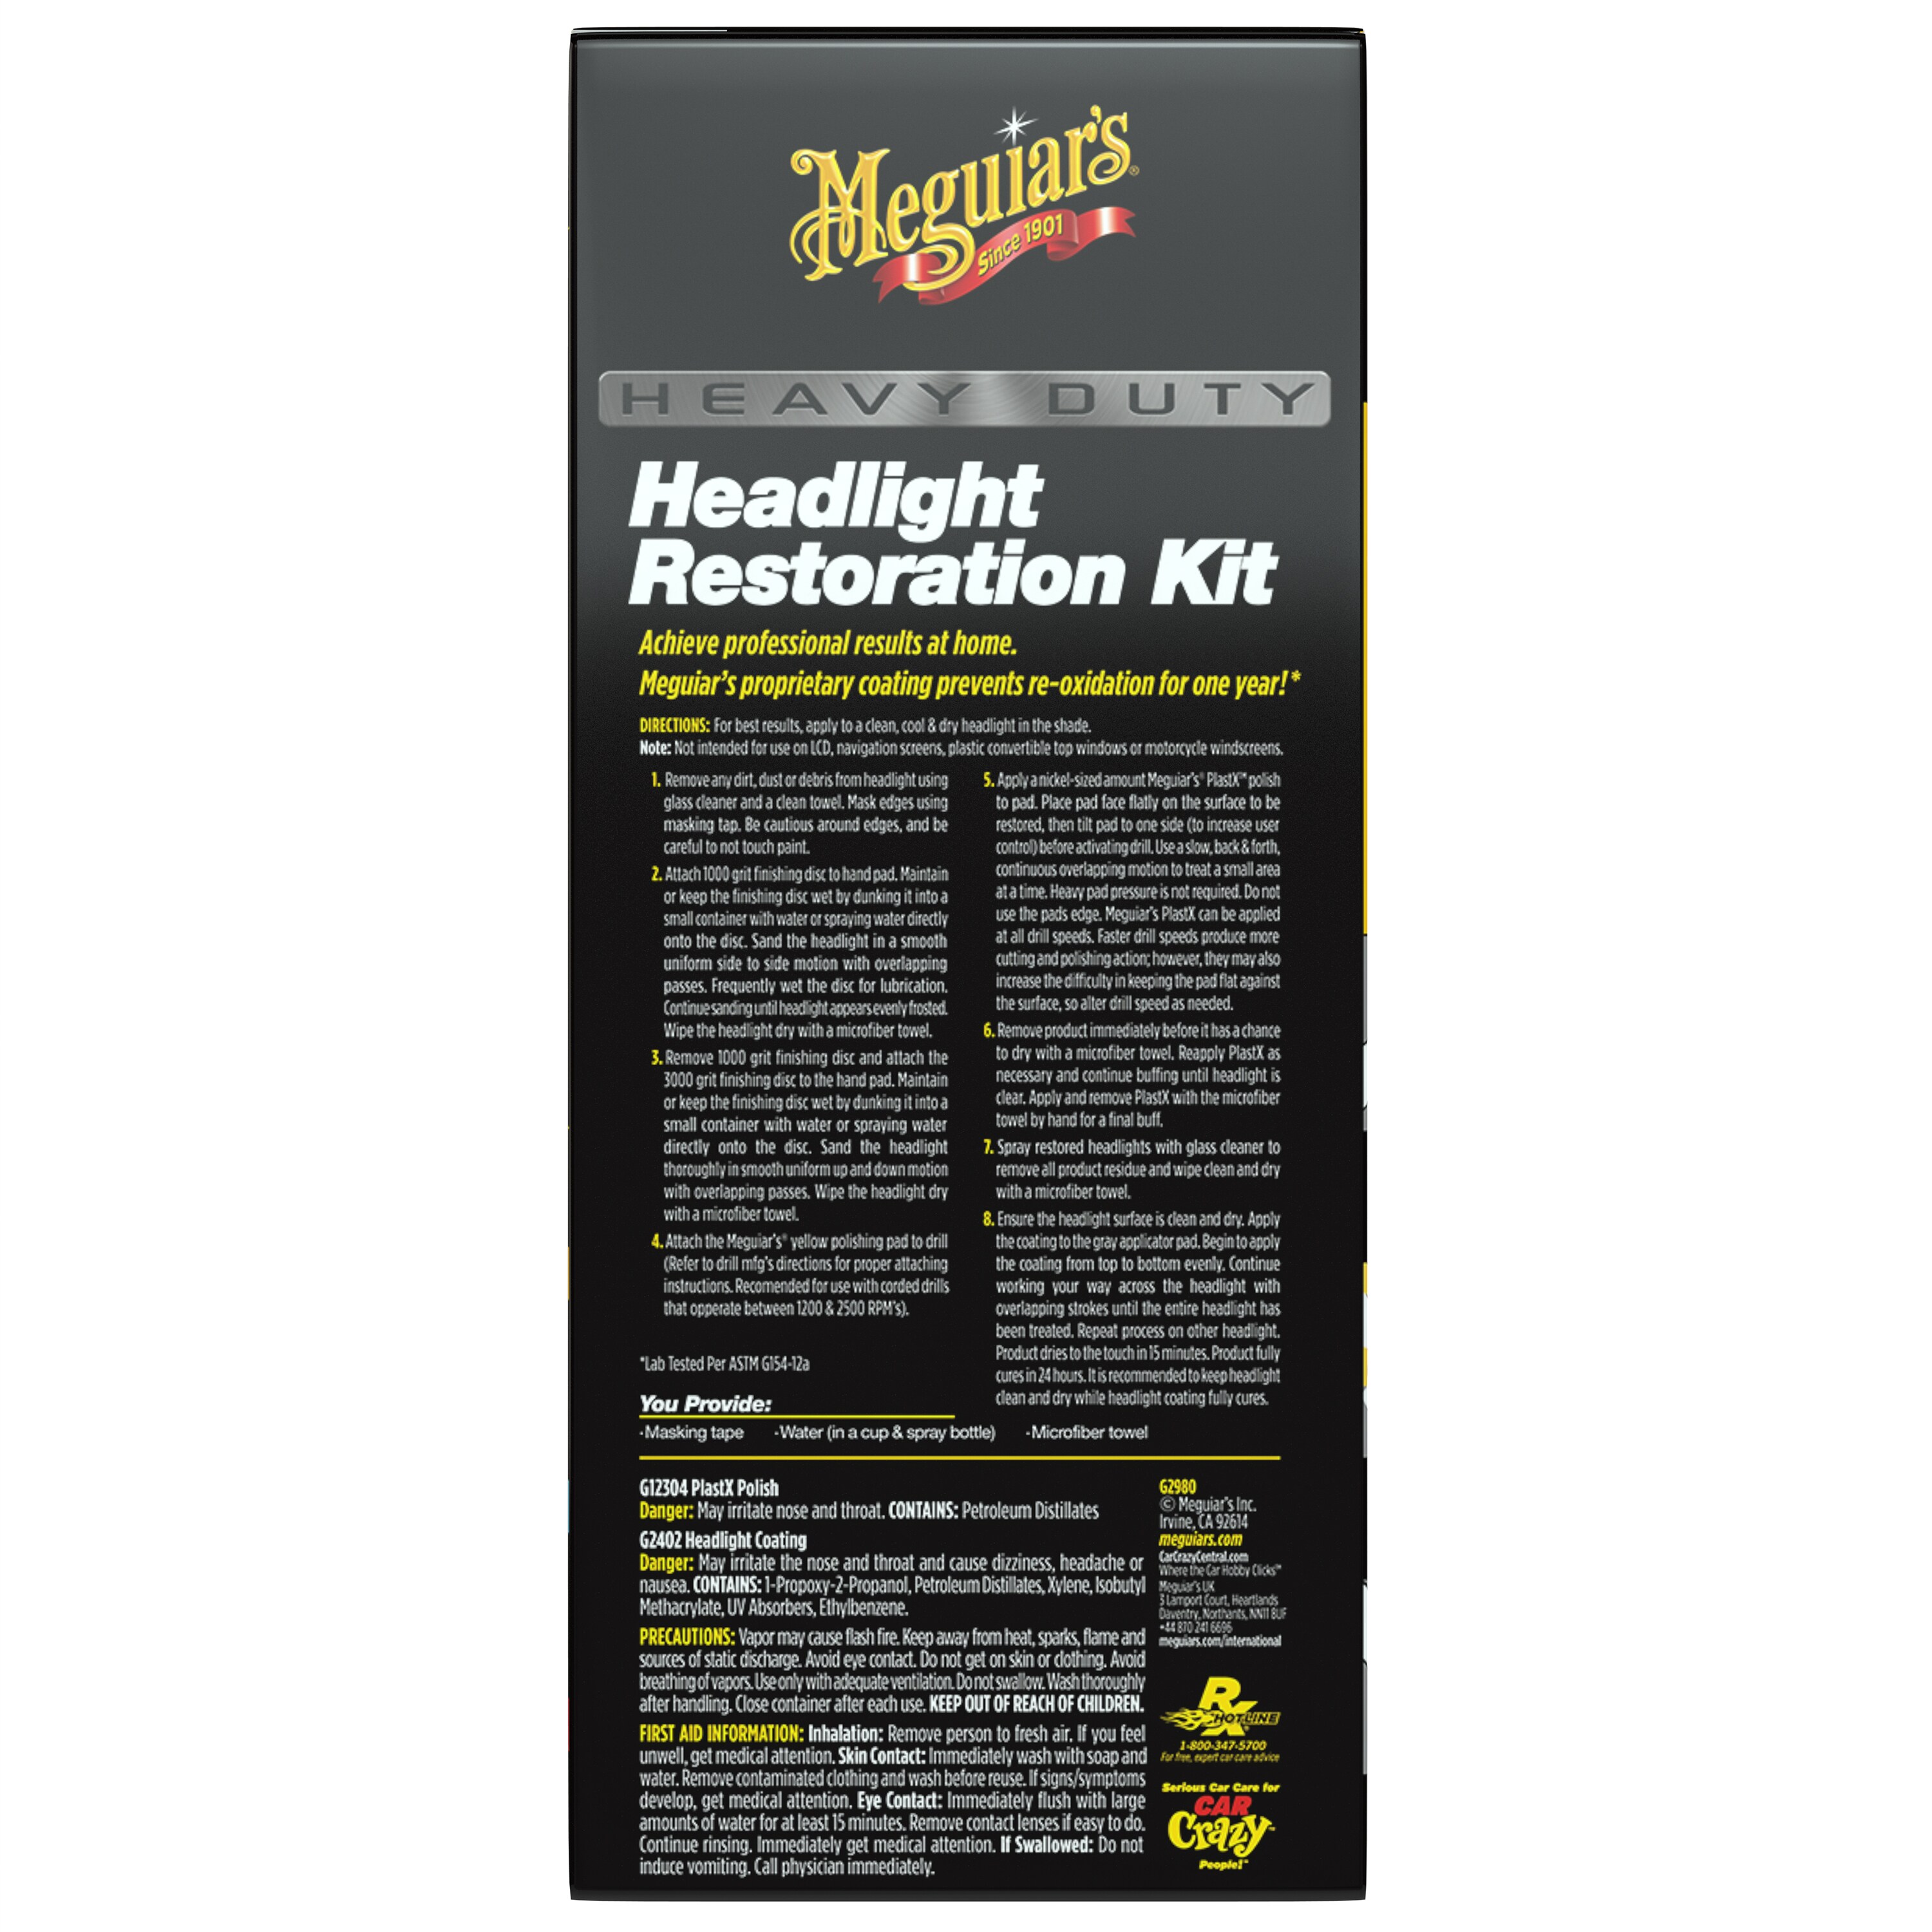 Review: Meguiar's Heavy Duty Headlight Restoration Kit 